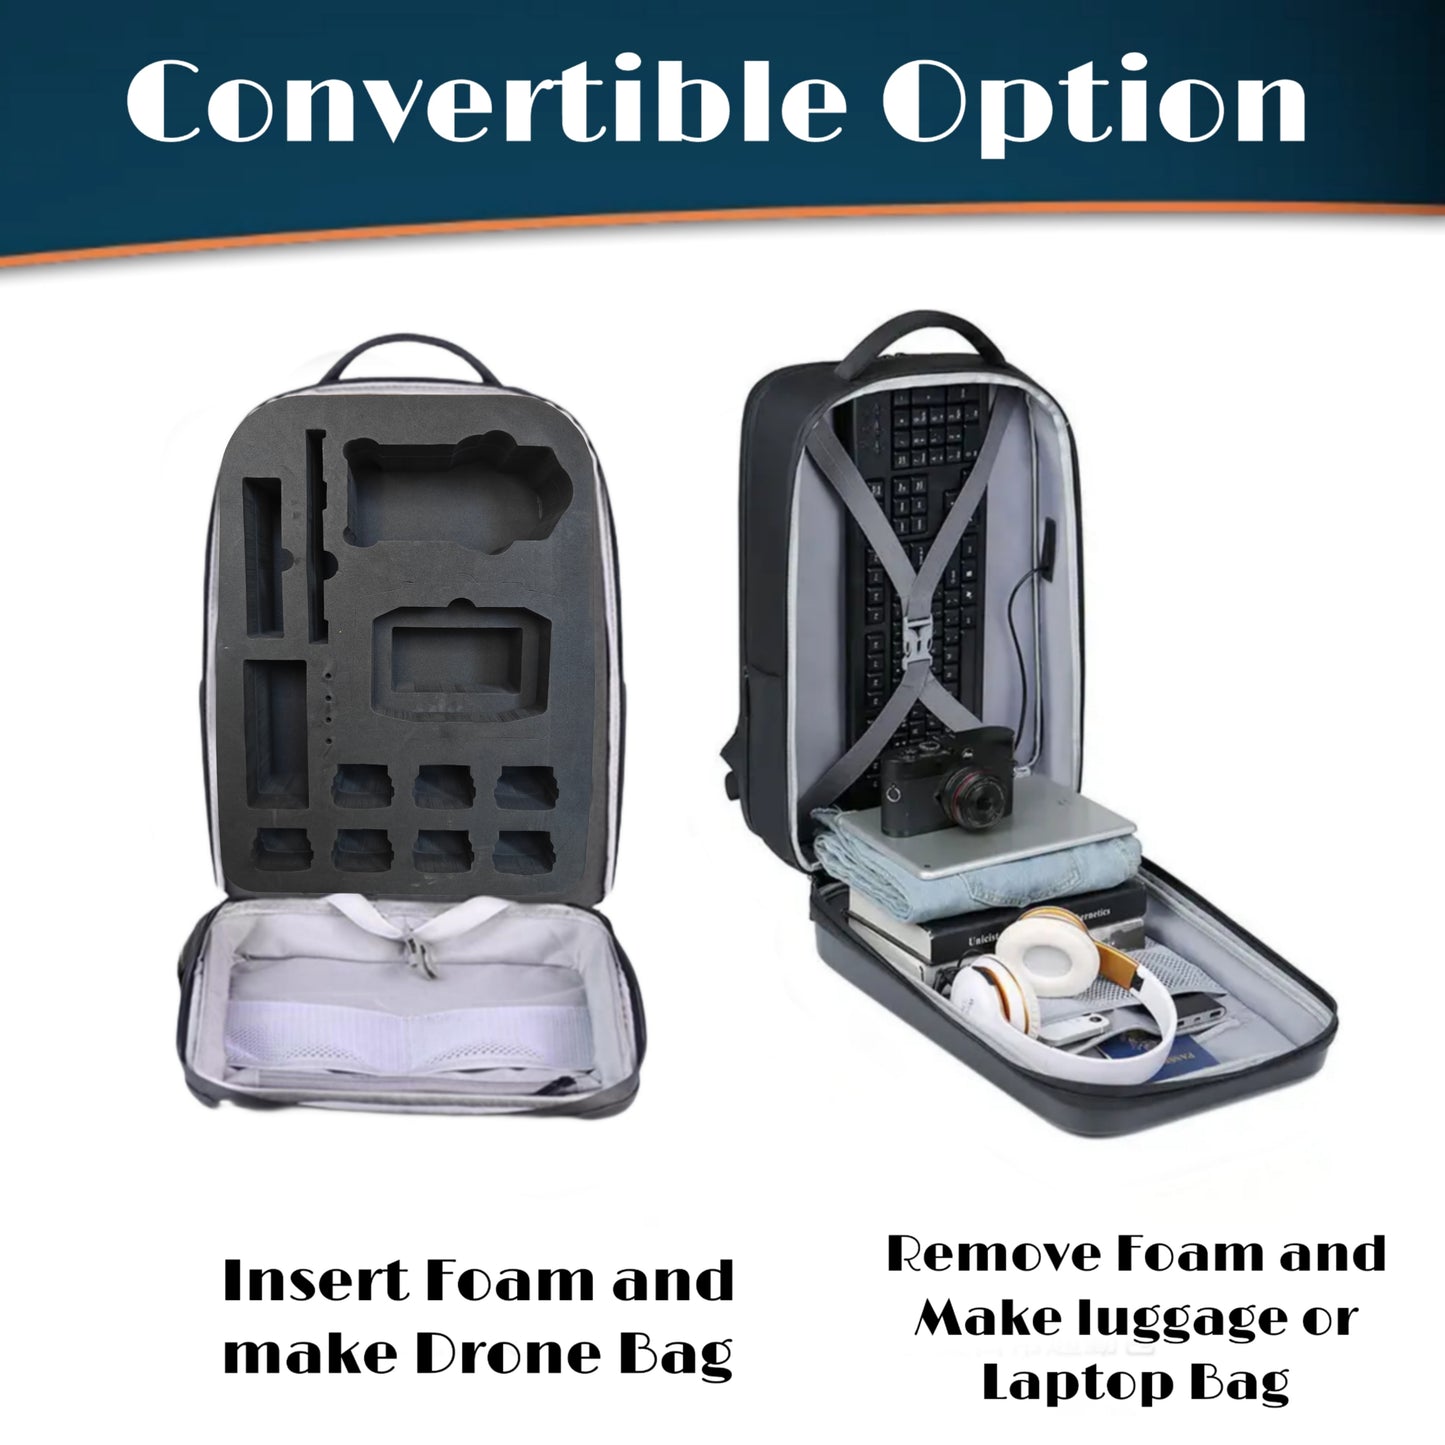 Multipurpose Hard Shell Waterproof Backpack for DJI Air 2s & Accessories (Black)